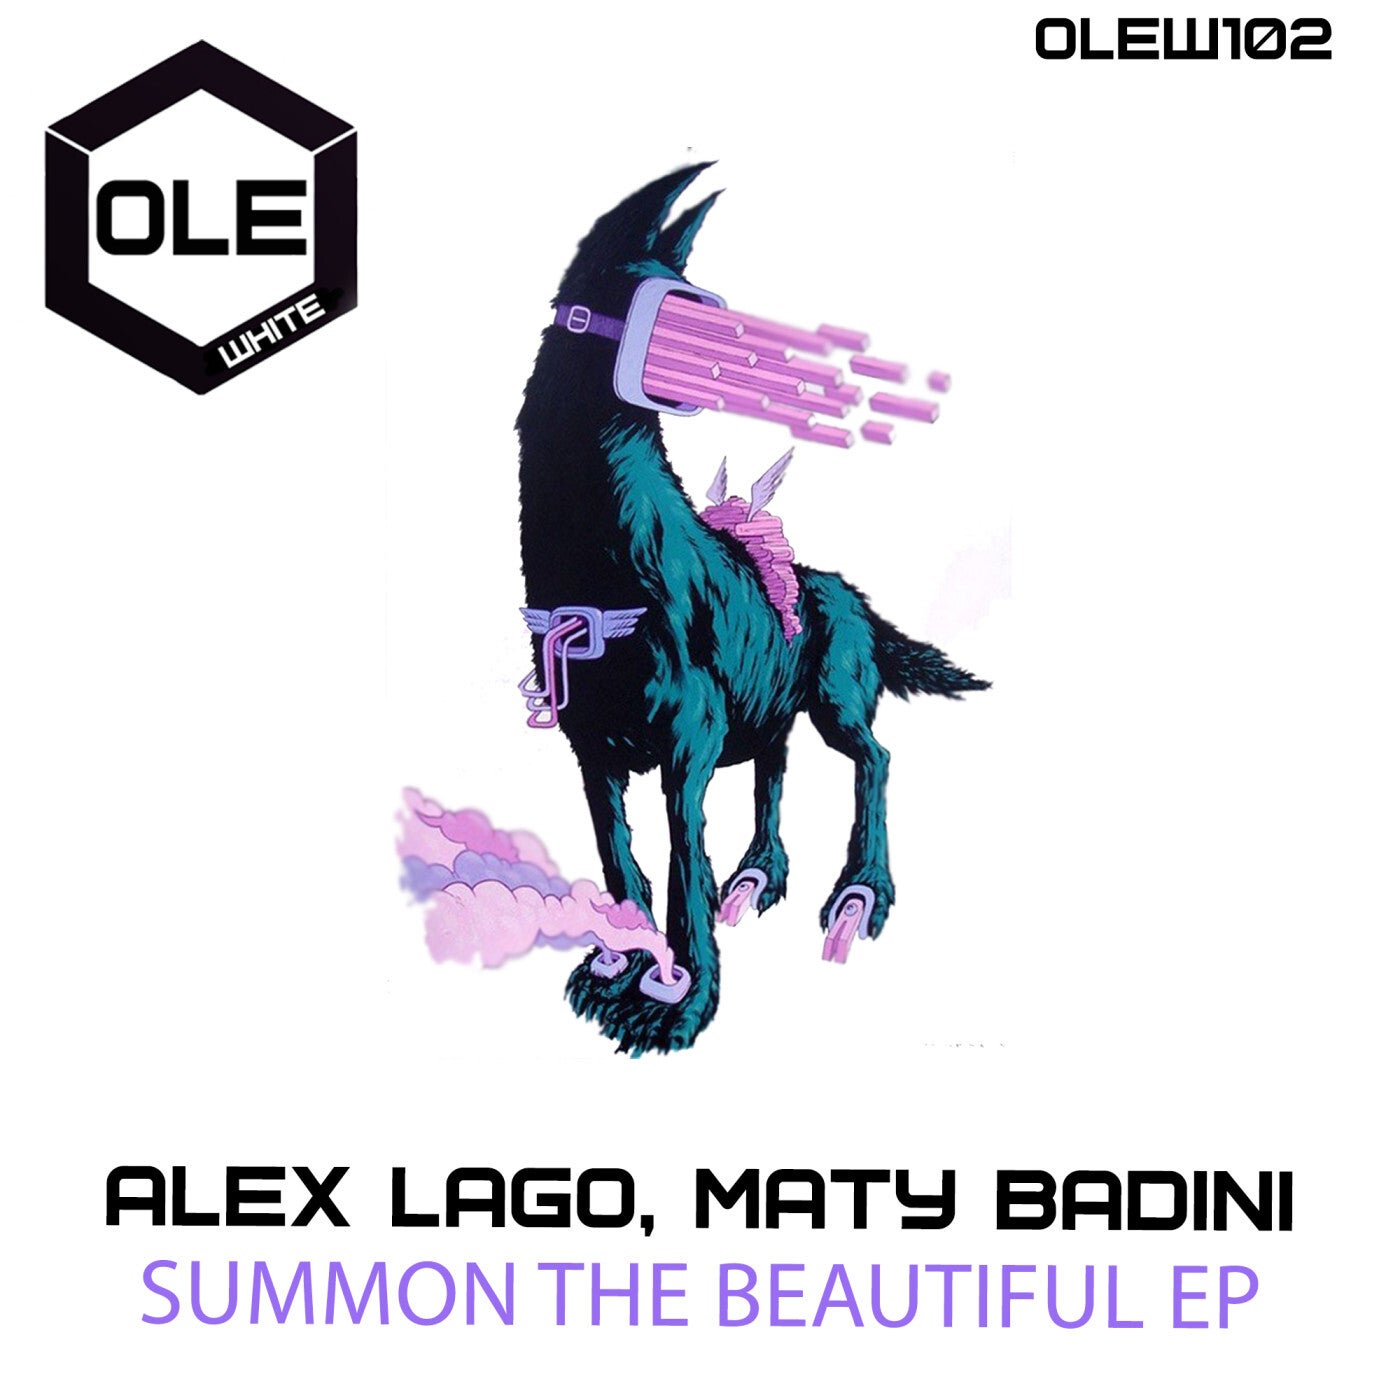 Summon The Beautiful EP